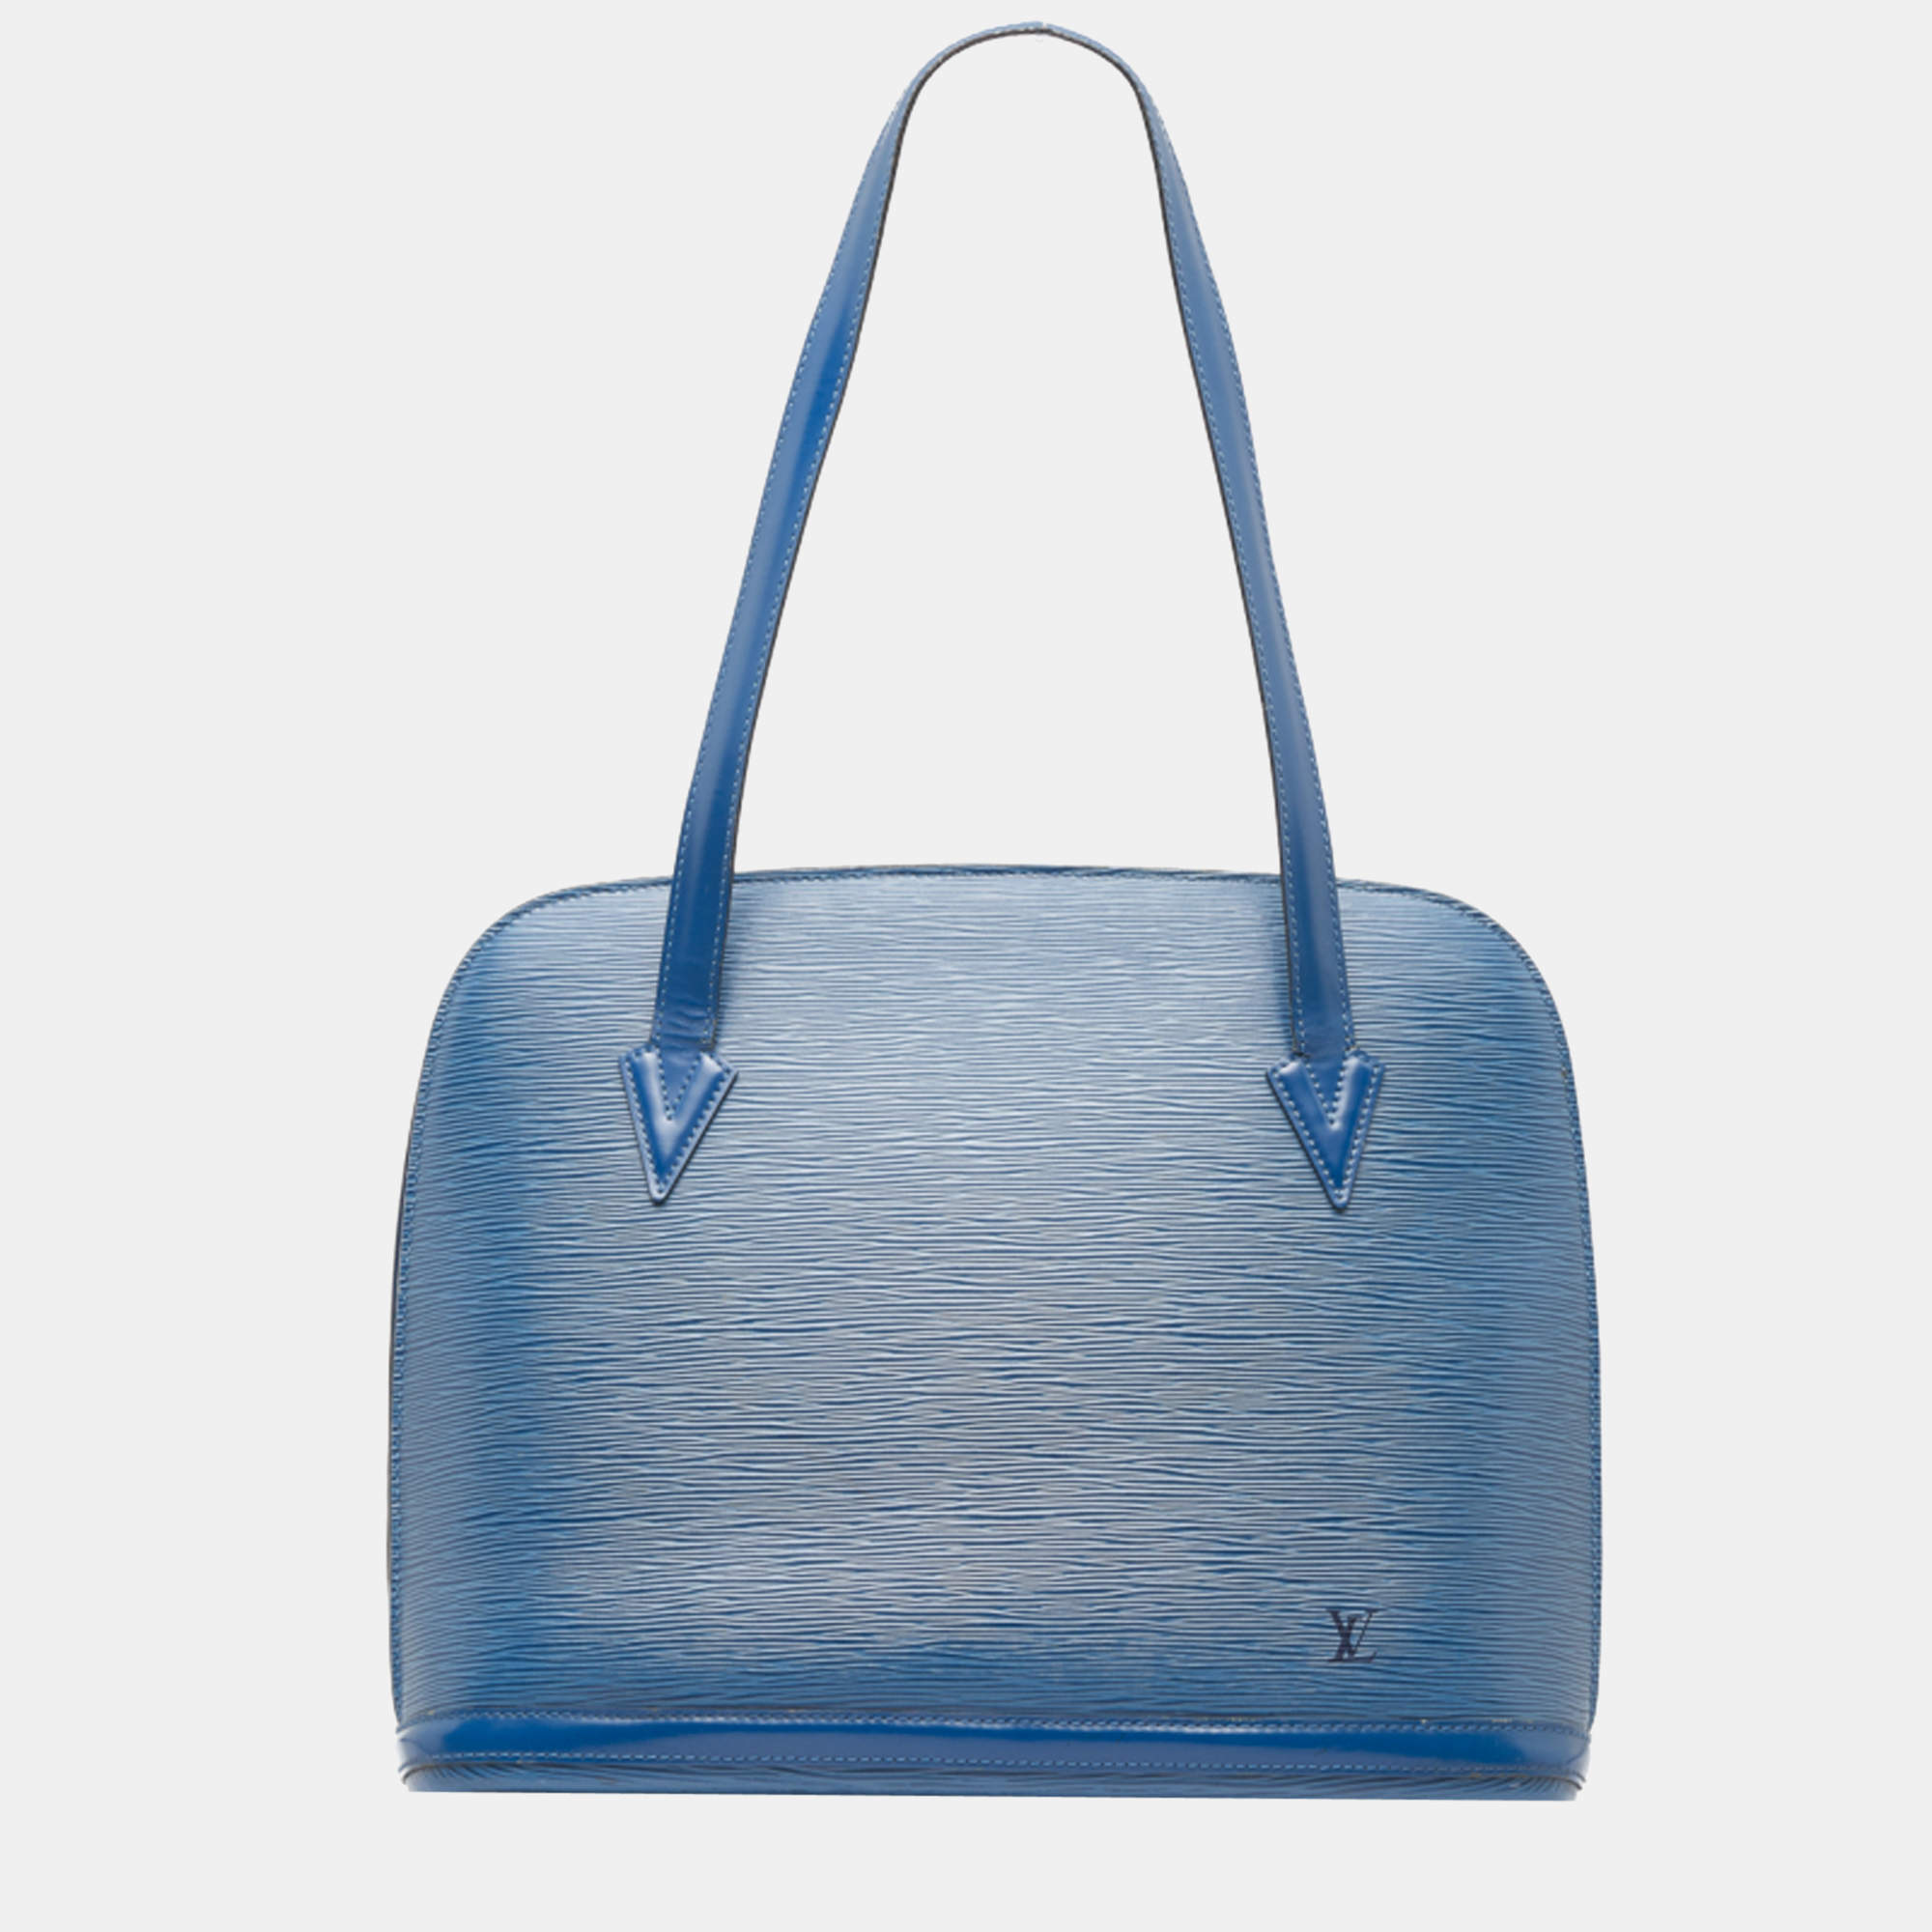 louis vuitton blue and white purse